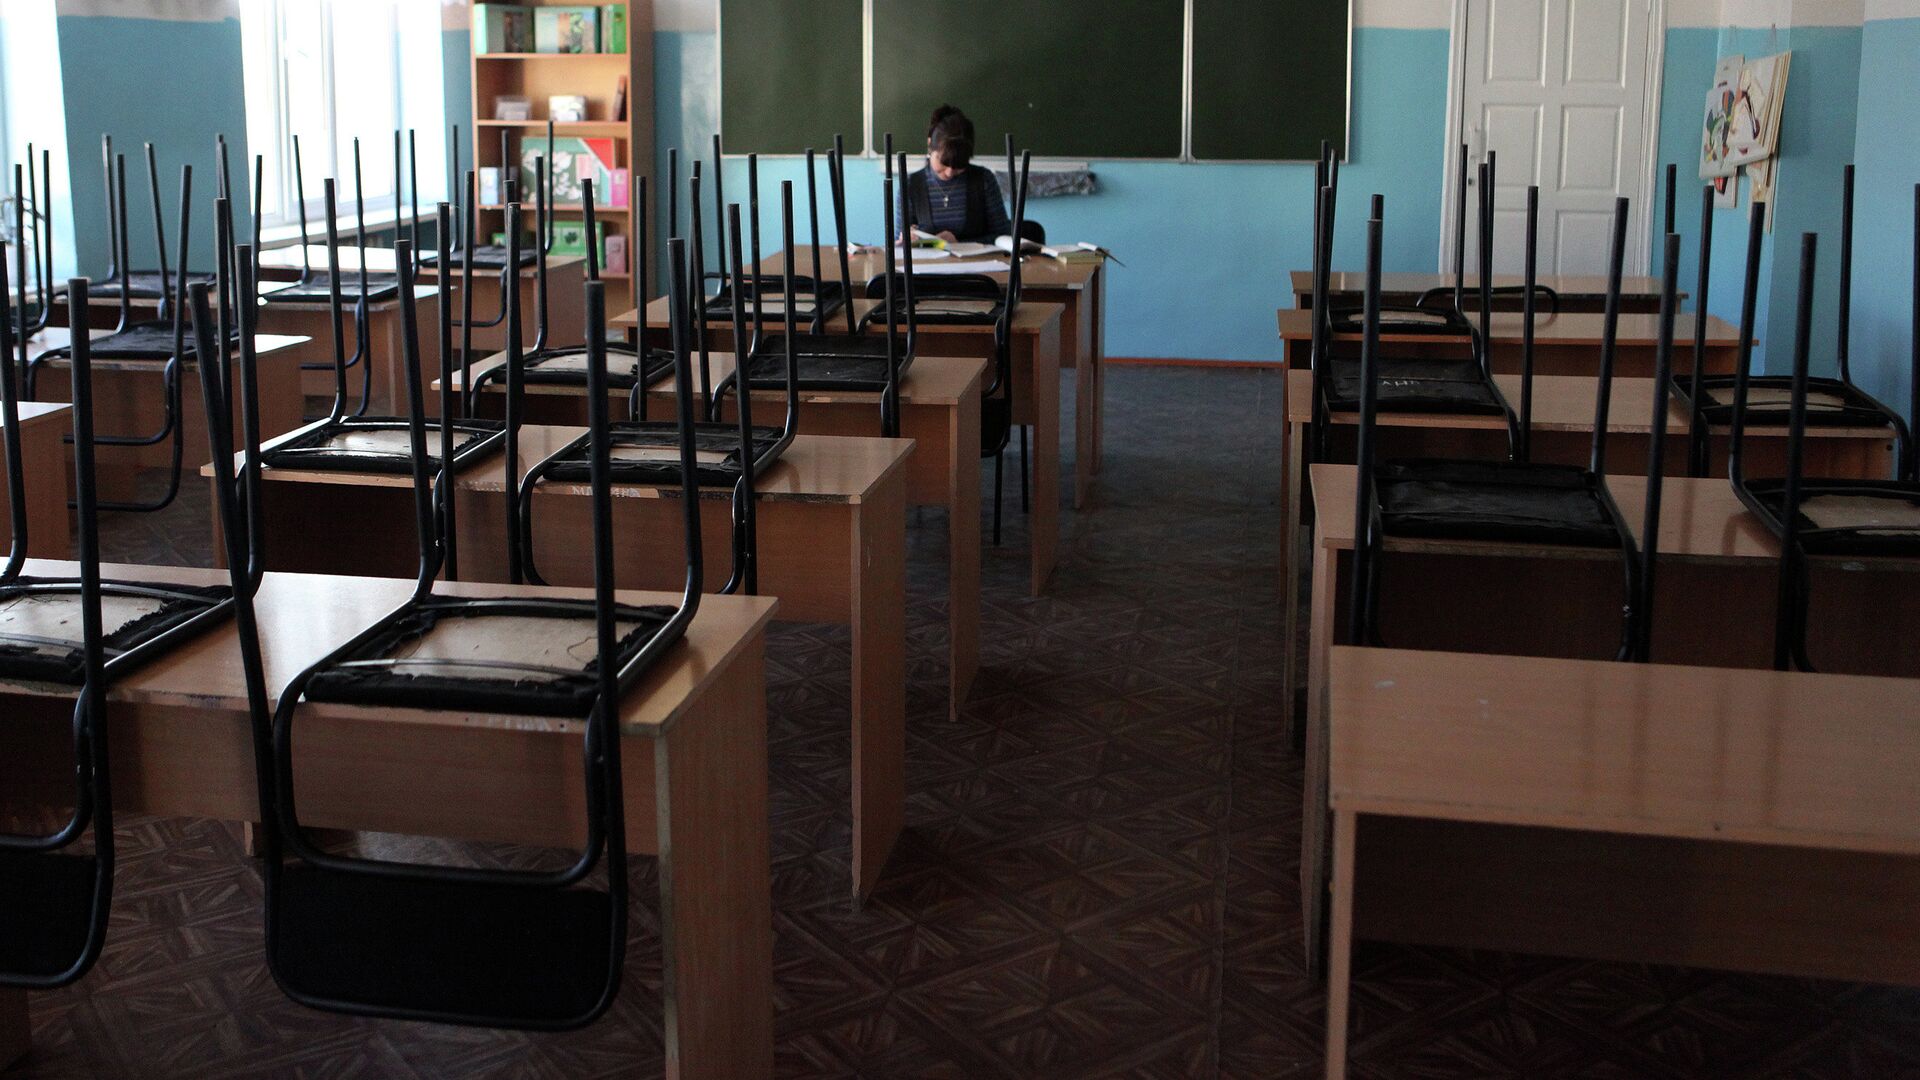 В Кыргызстане закрыли на карантин более 500 школ